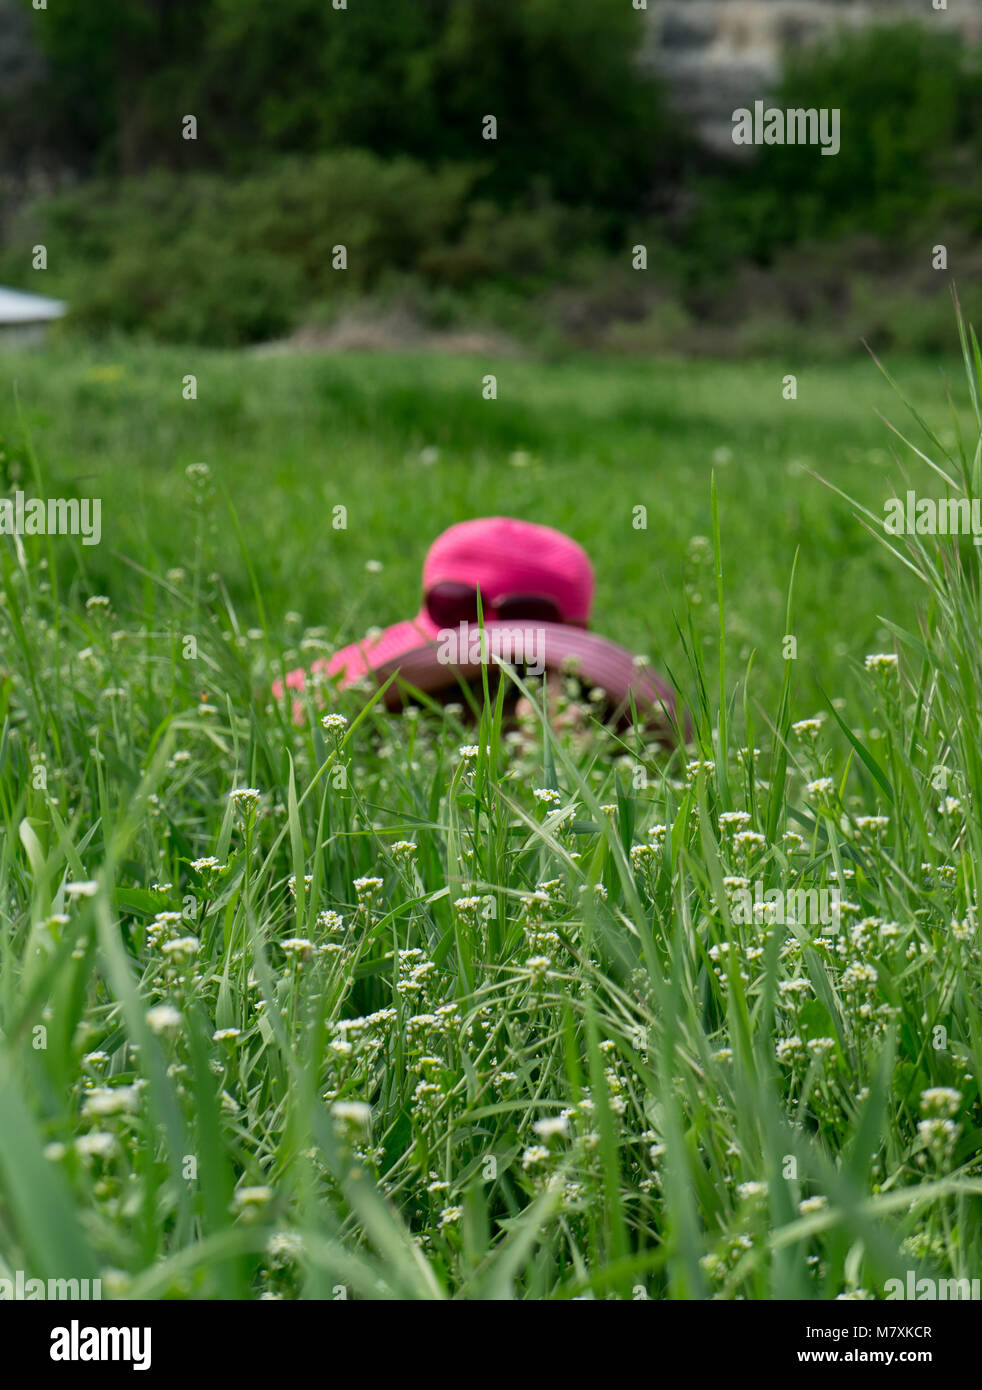 girl hiding in grass Stock Photo